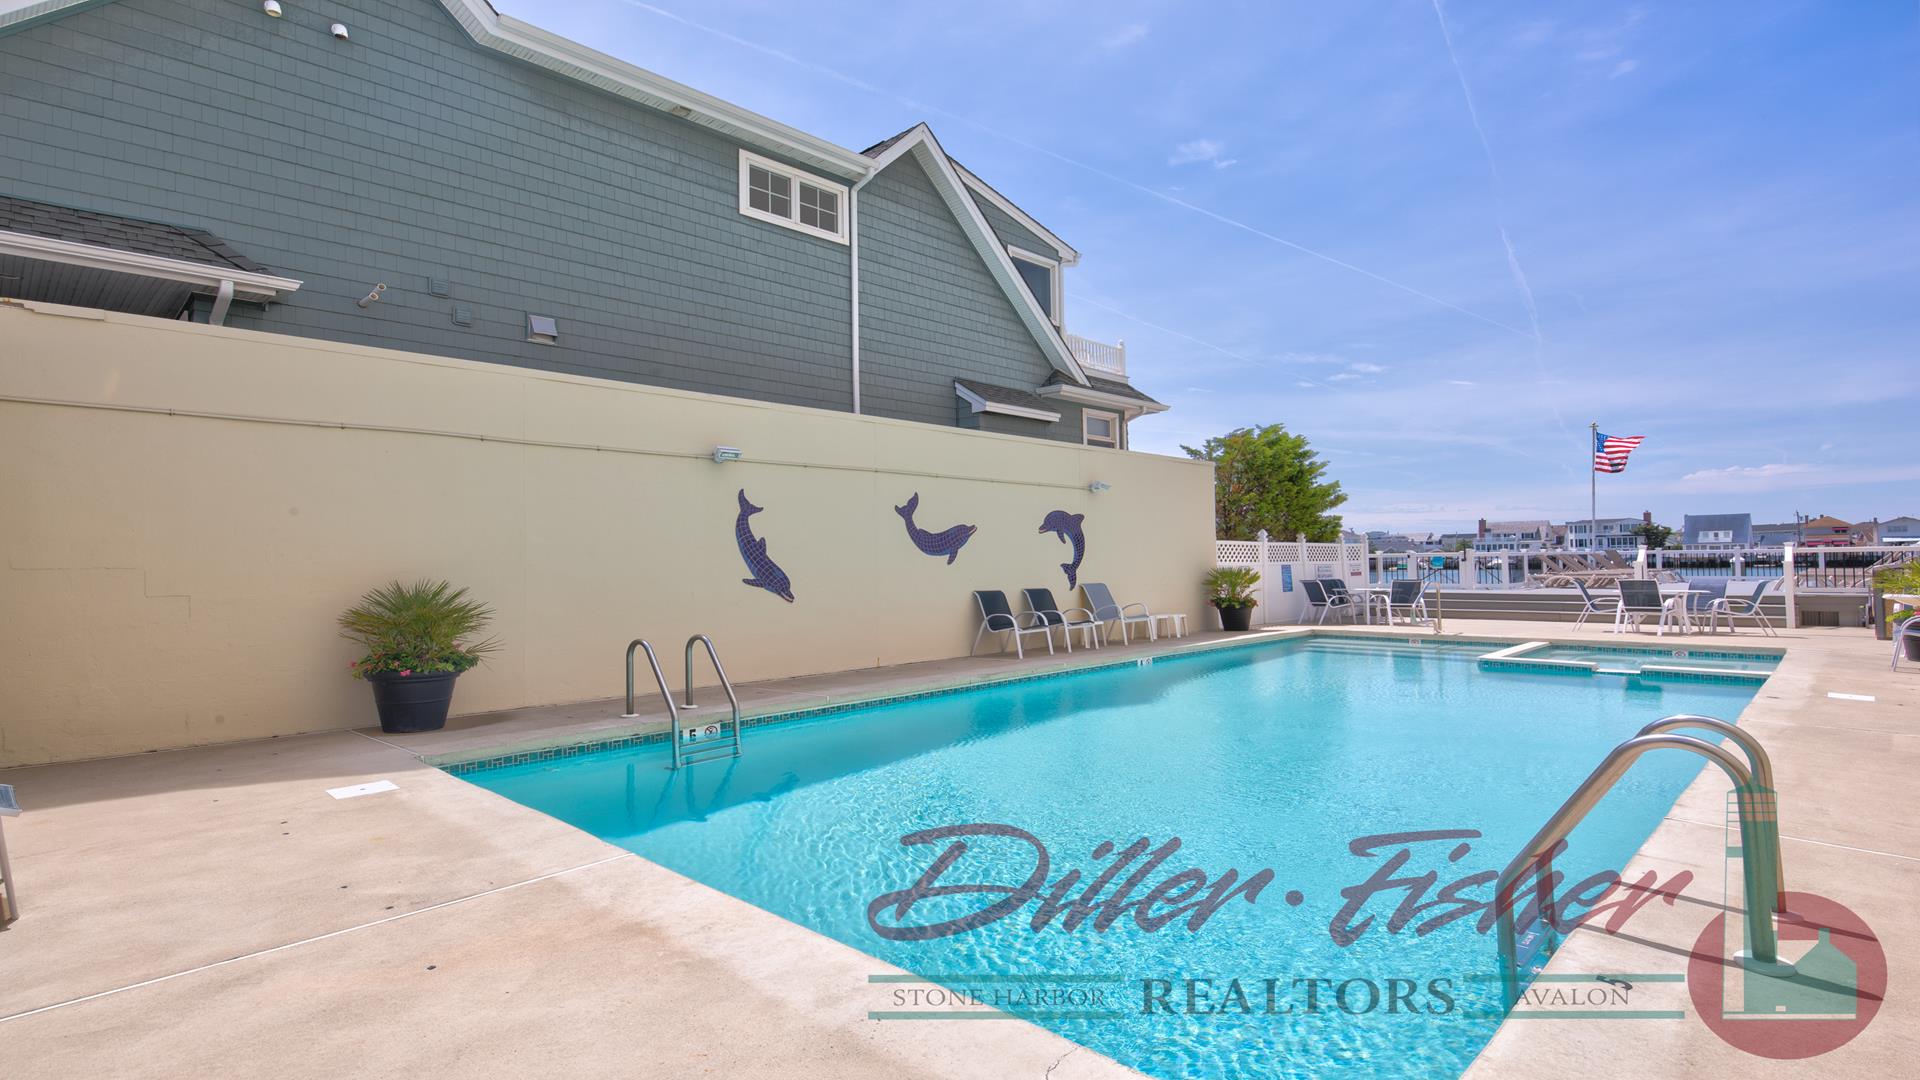 Diller Fisher Stone | Rentals 96th Harbor Street, Vacation | Realtors 351